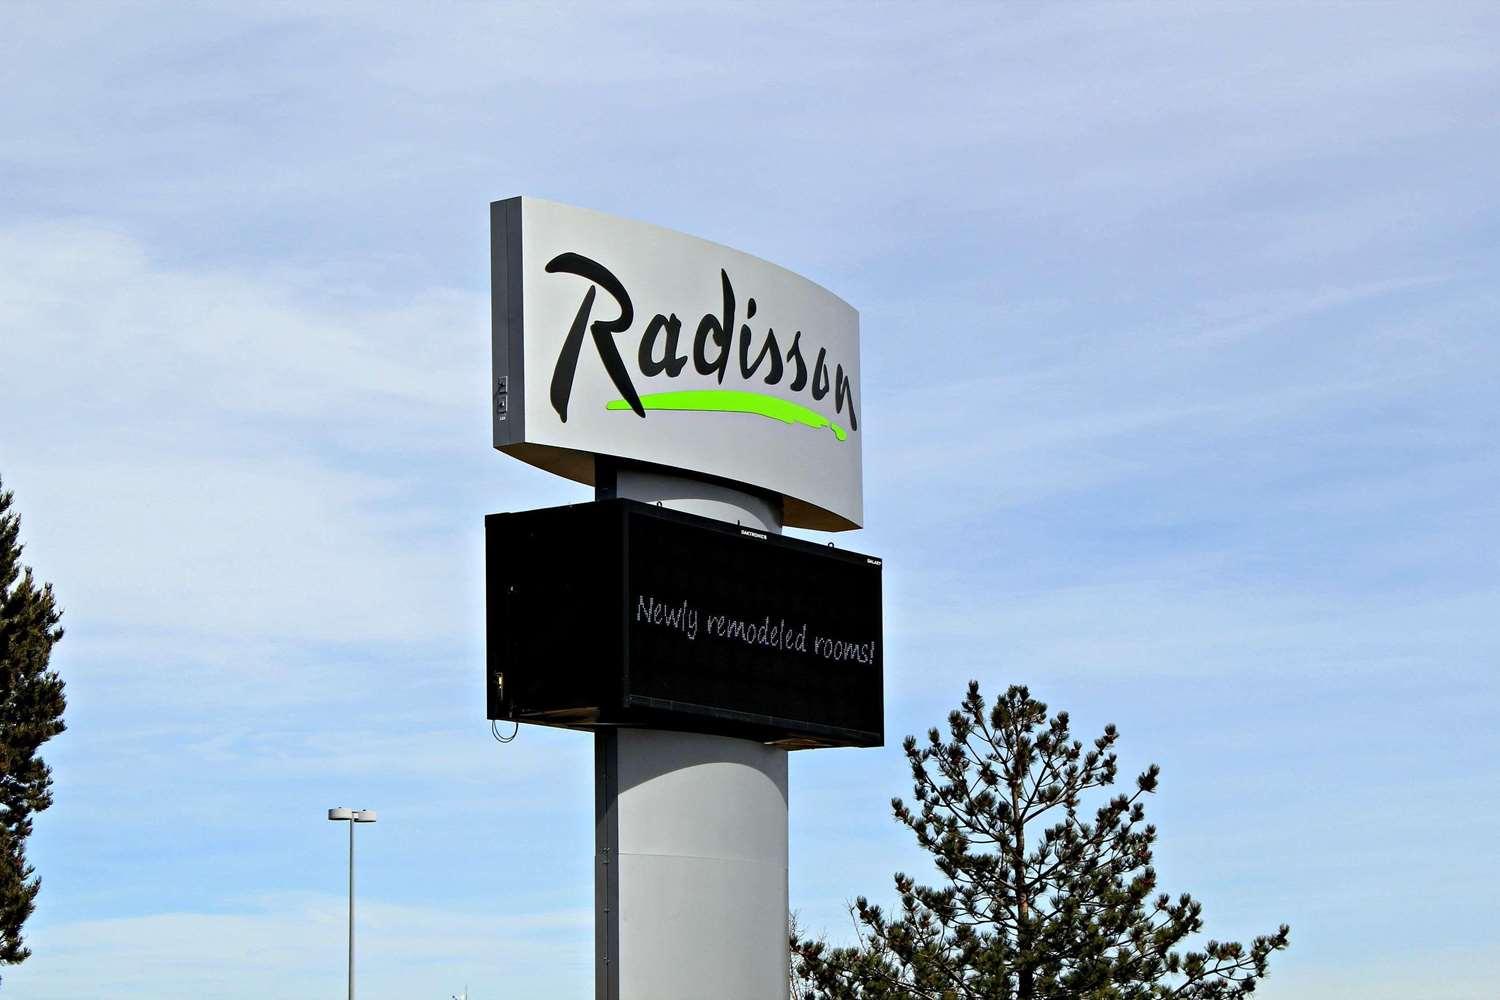 Radisson Hotel Denver Central in Denver, CO